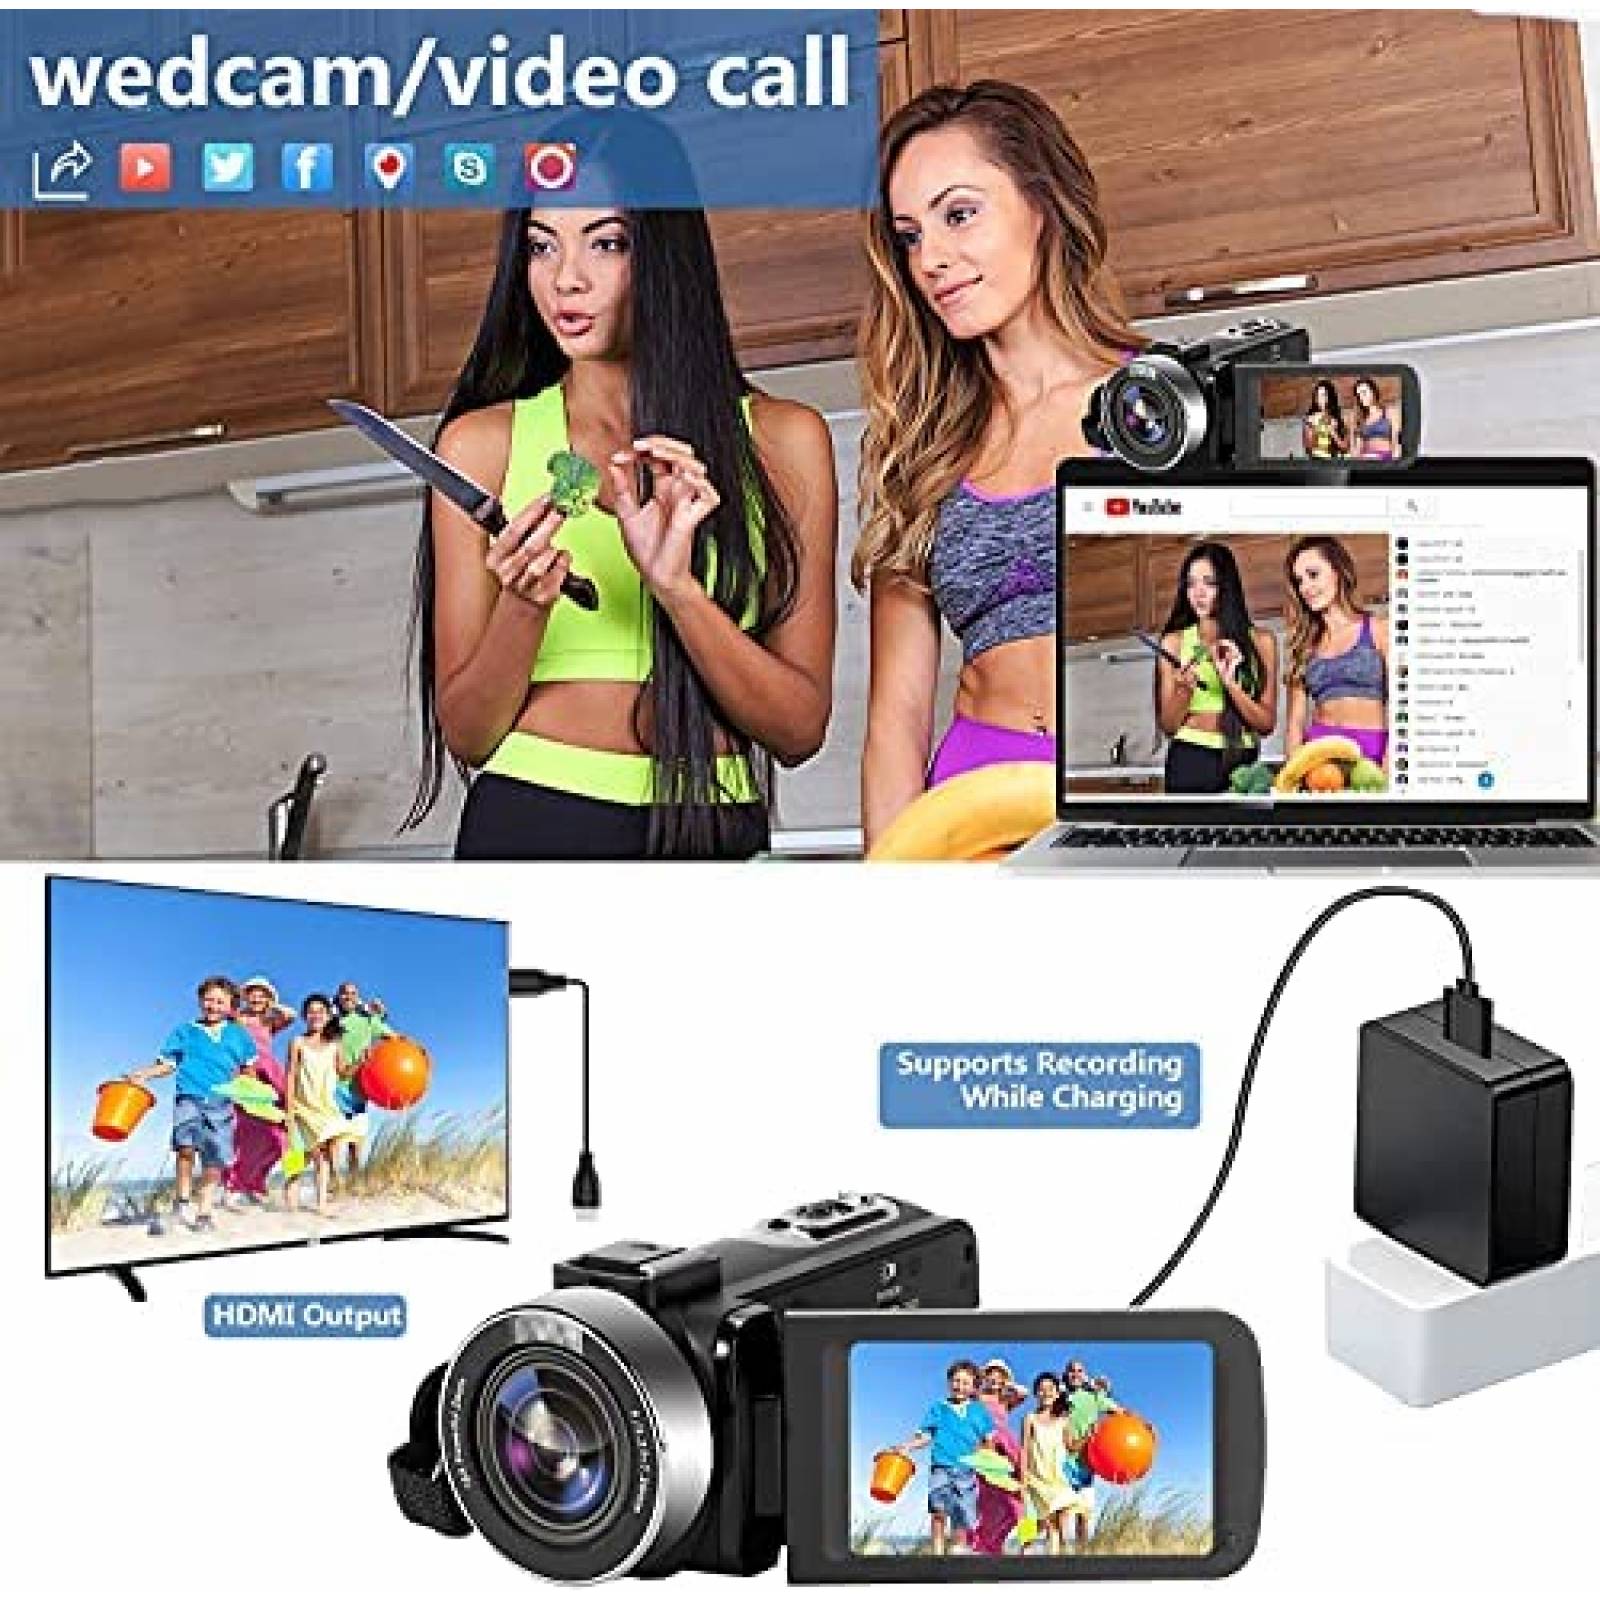 Kit de videocámara de cámara de video 4K, zoom digital de 56 MP 18X de 3.0  pulgadas, pantalla táctil IPS de 3.0 pulgadas, videocámara digital de mano